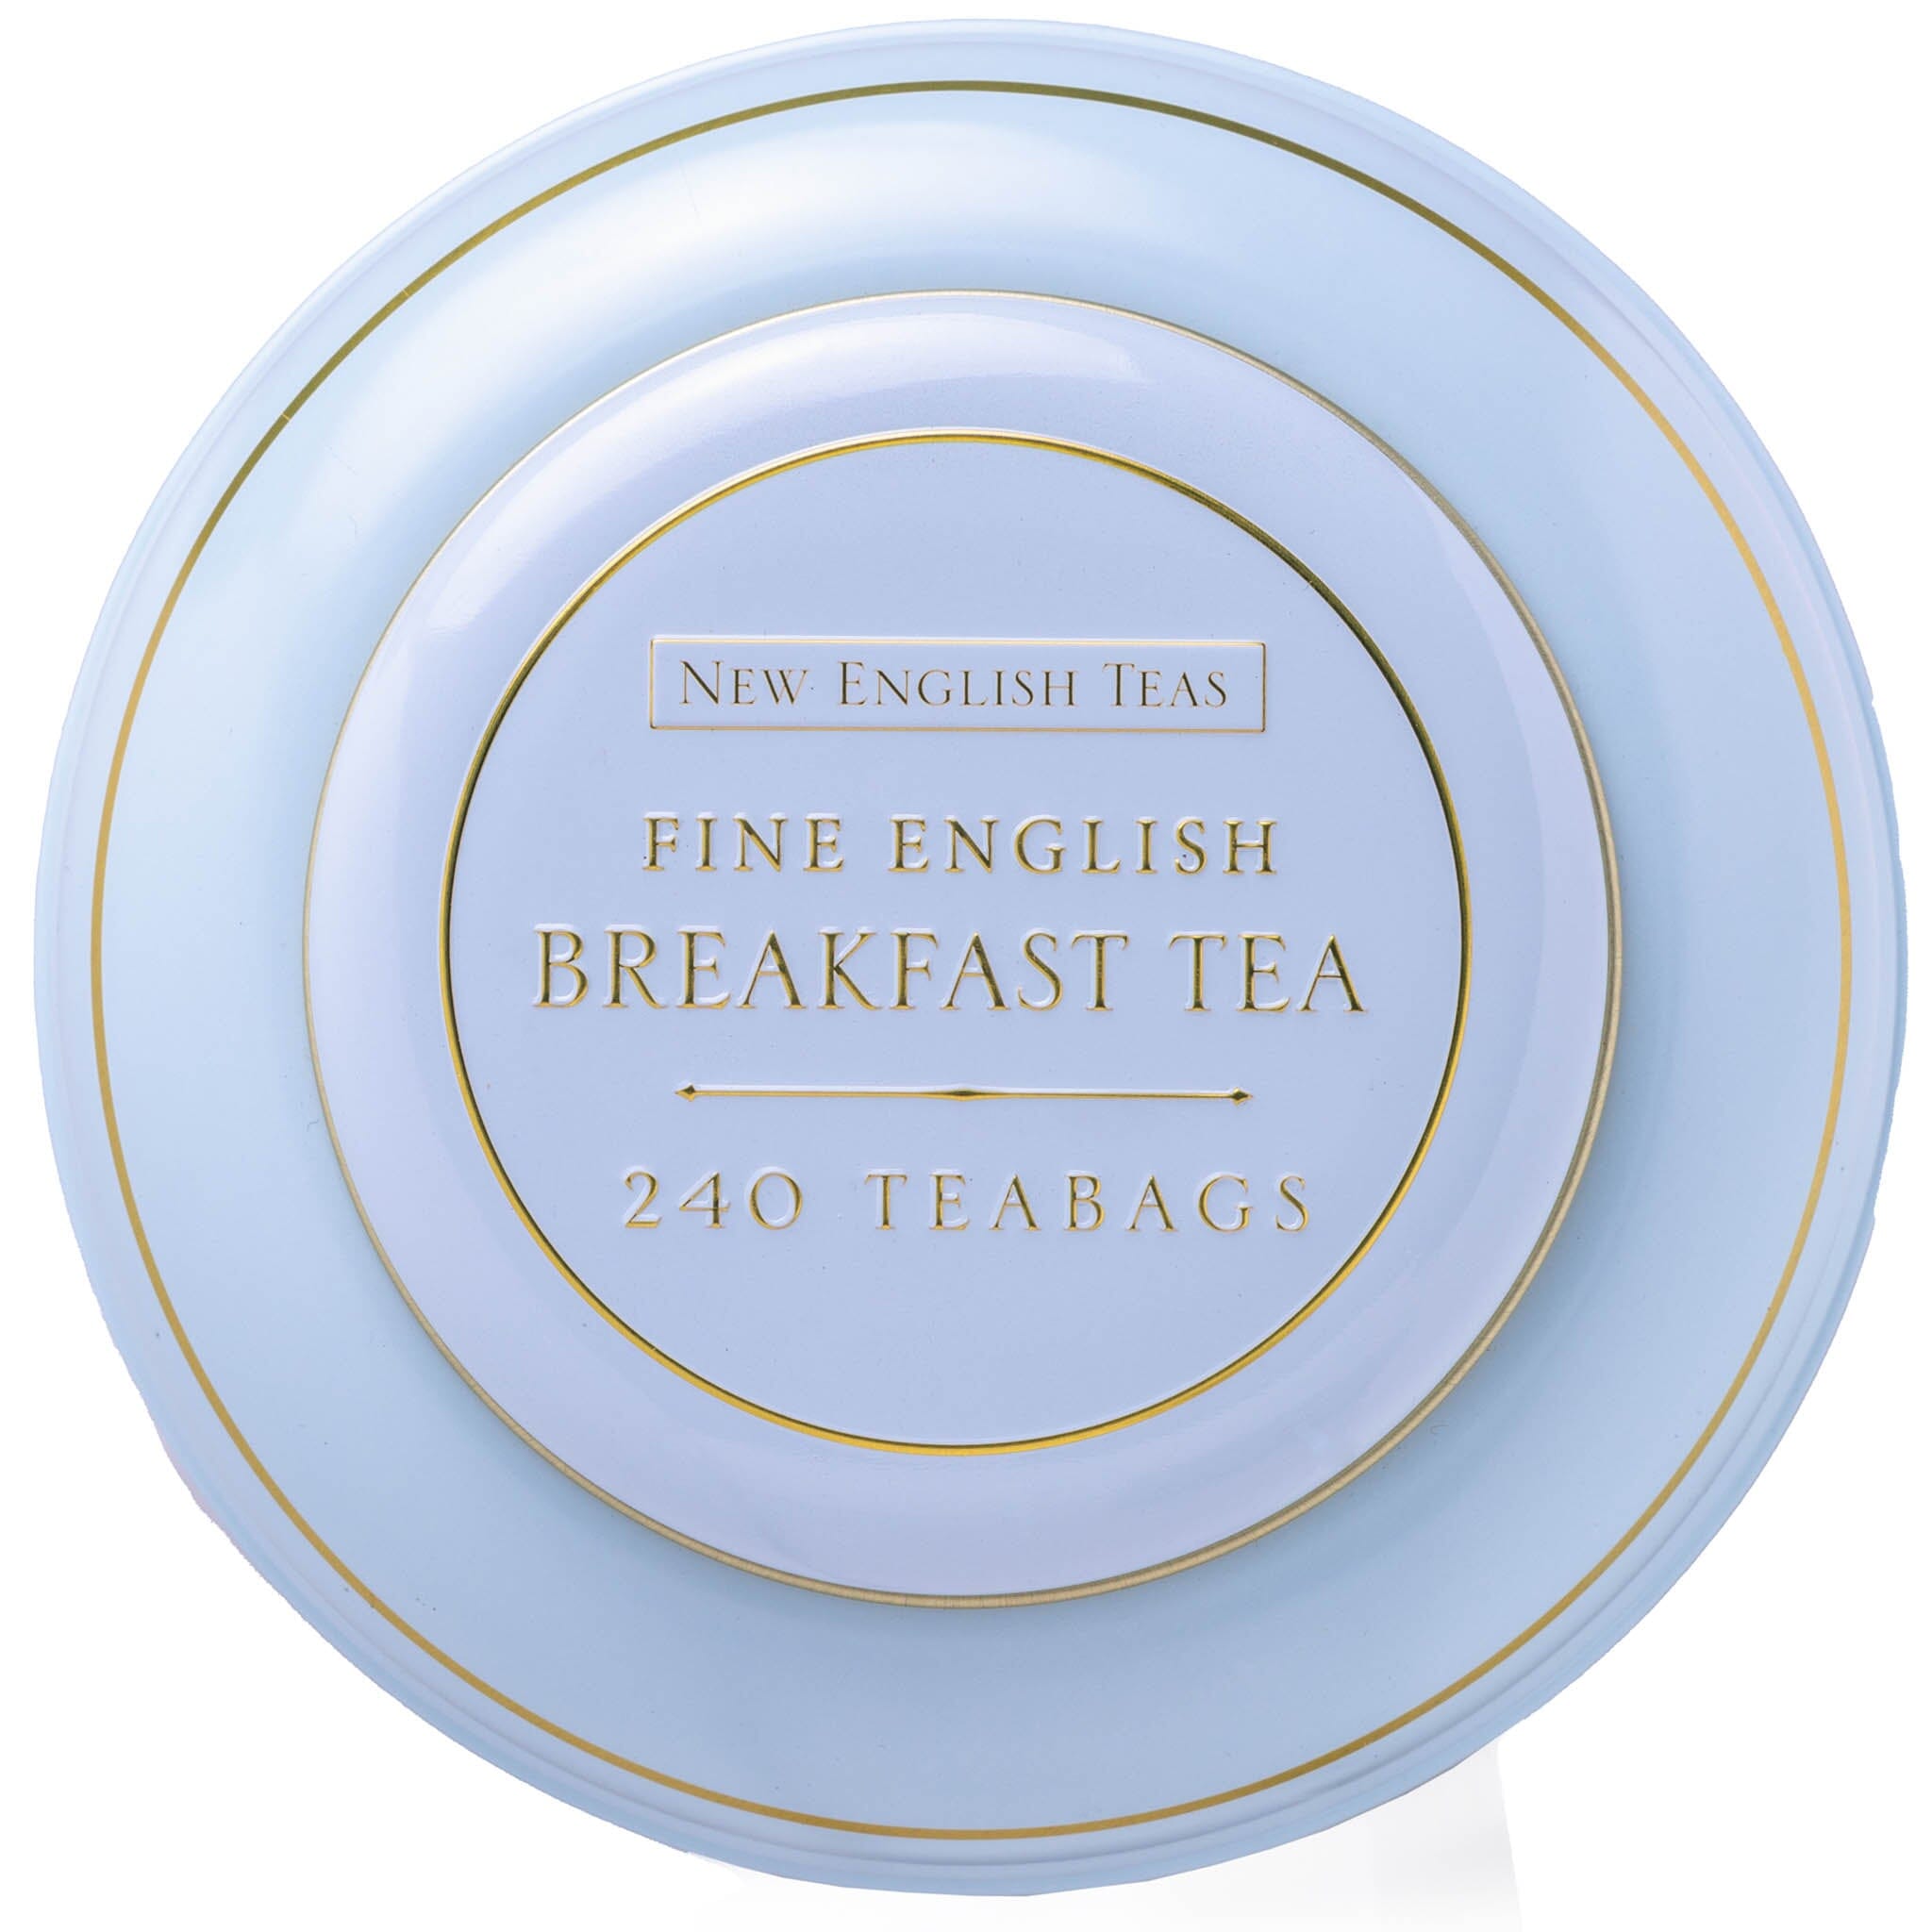 Pale Blue Song Thrush & Berries Large Tea Caddy Tea Tins New English Teas 